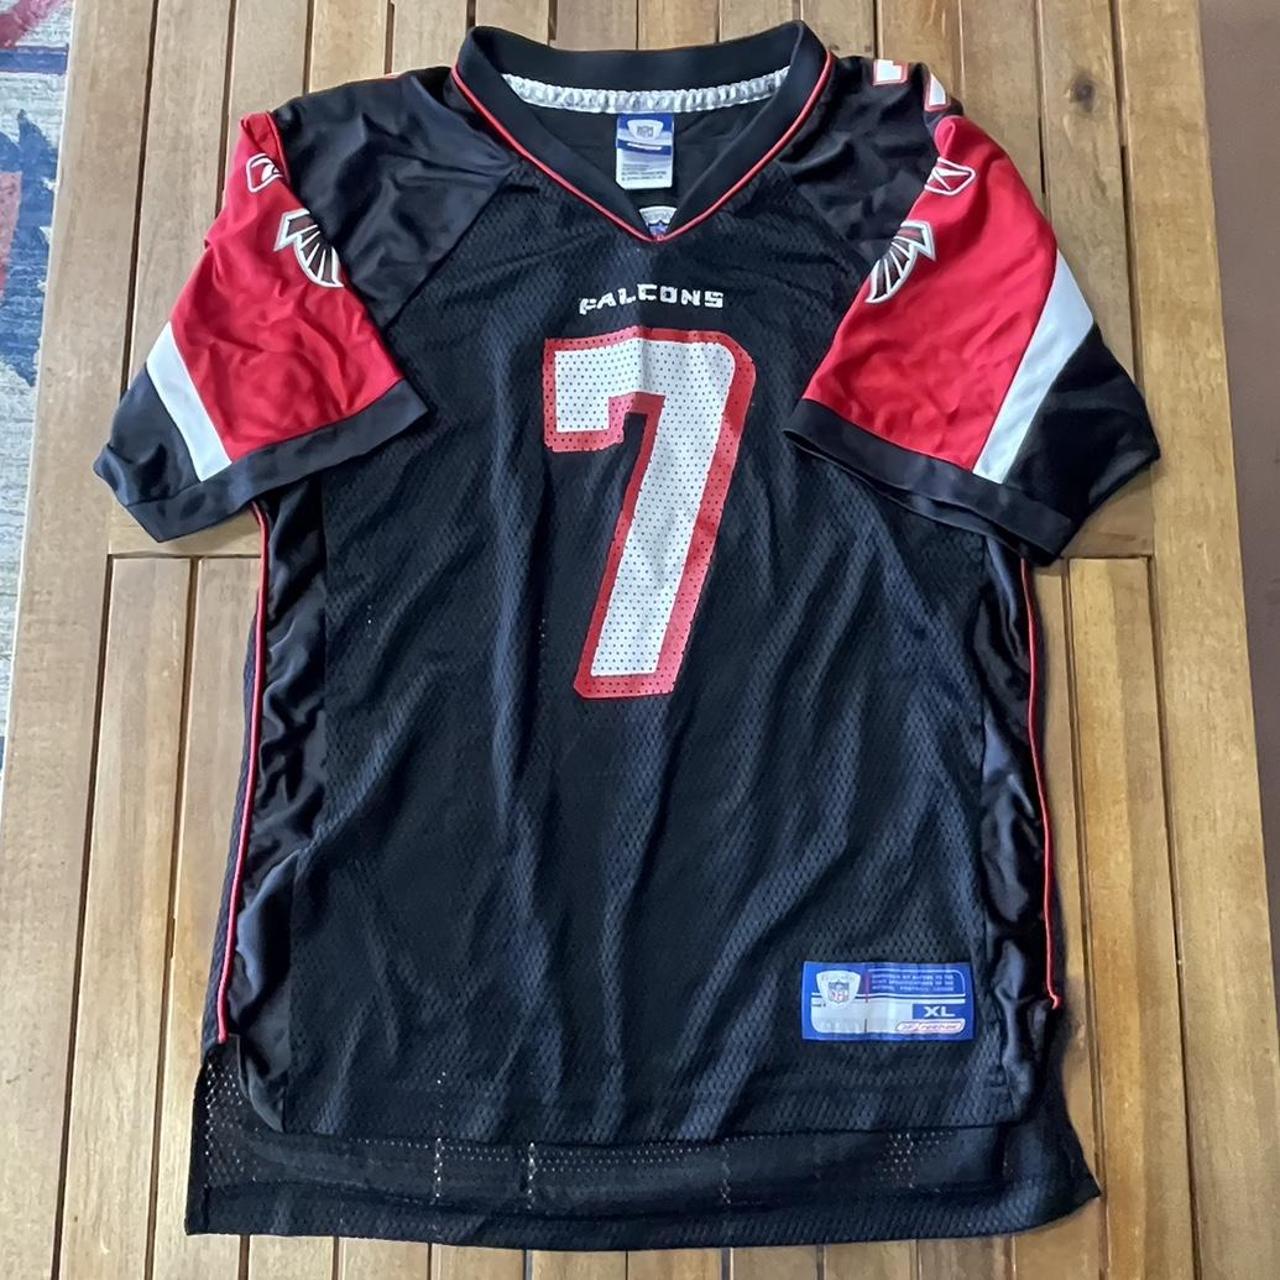 Reebok, Shirts, Authentic Reebok Michael Vick Atlanta Falcons Jersey